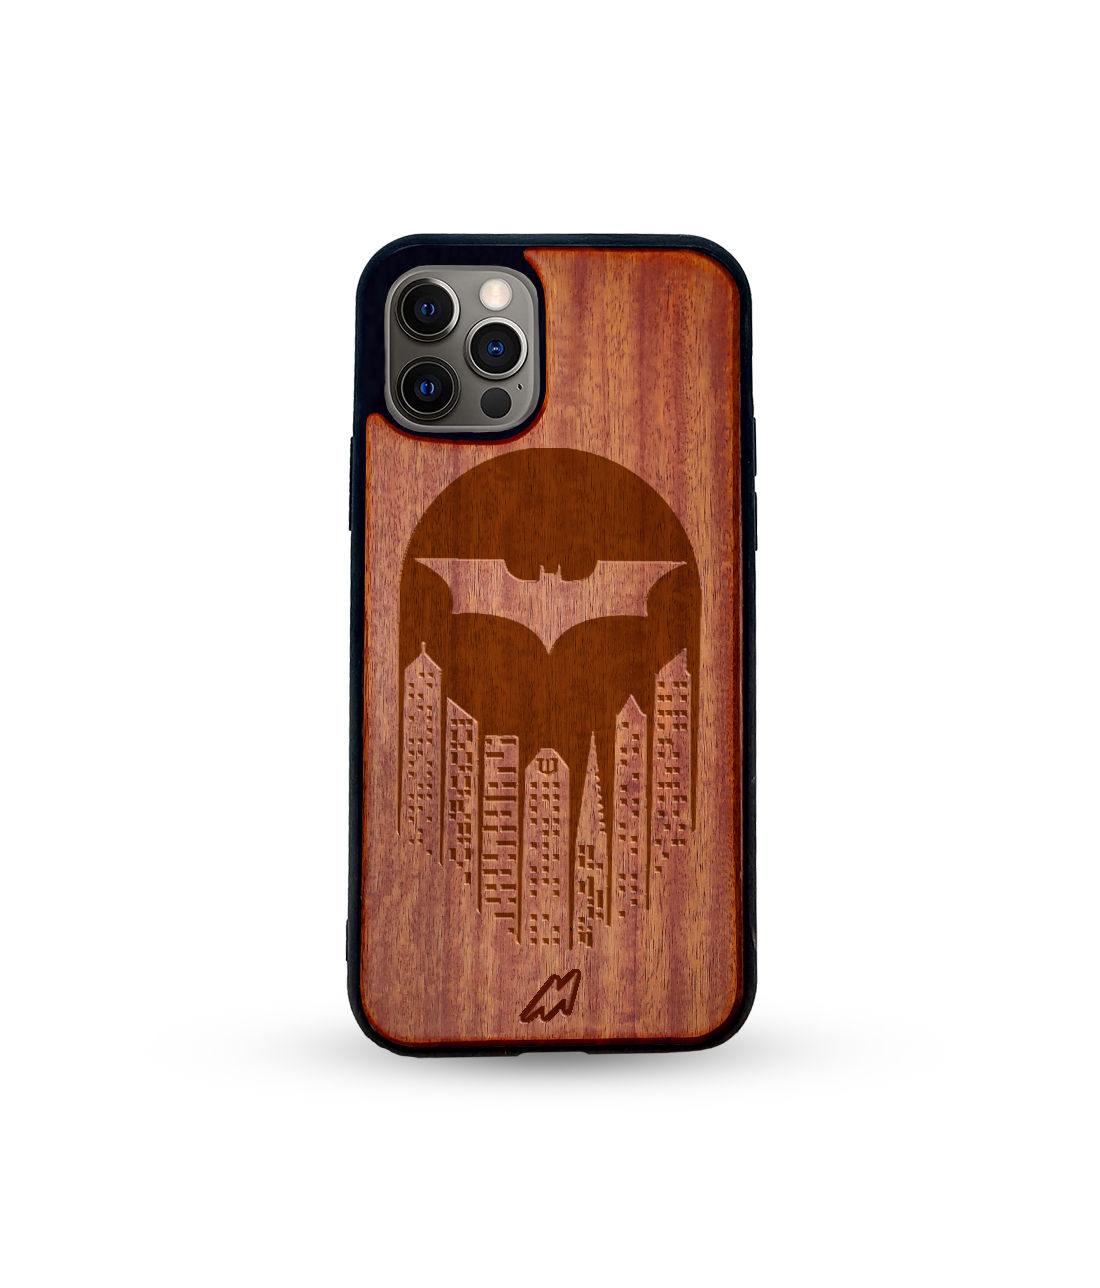 Bat Signal - Dark Shade Wooden Phone Case for iPhone 12 Pro